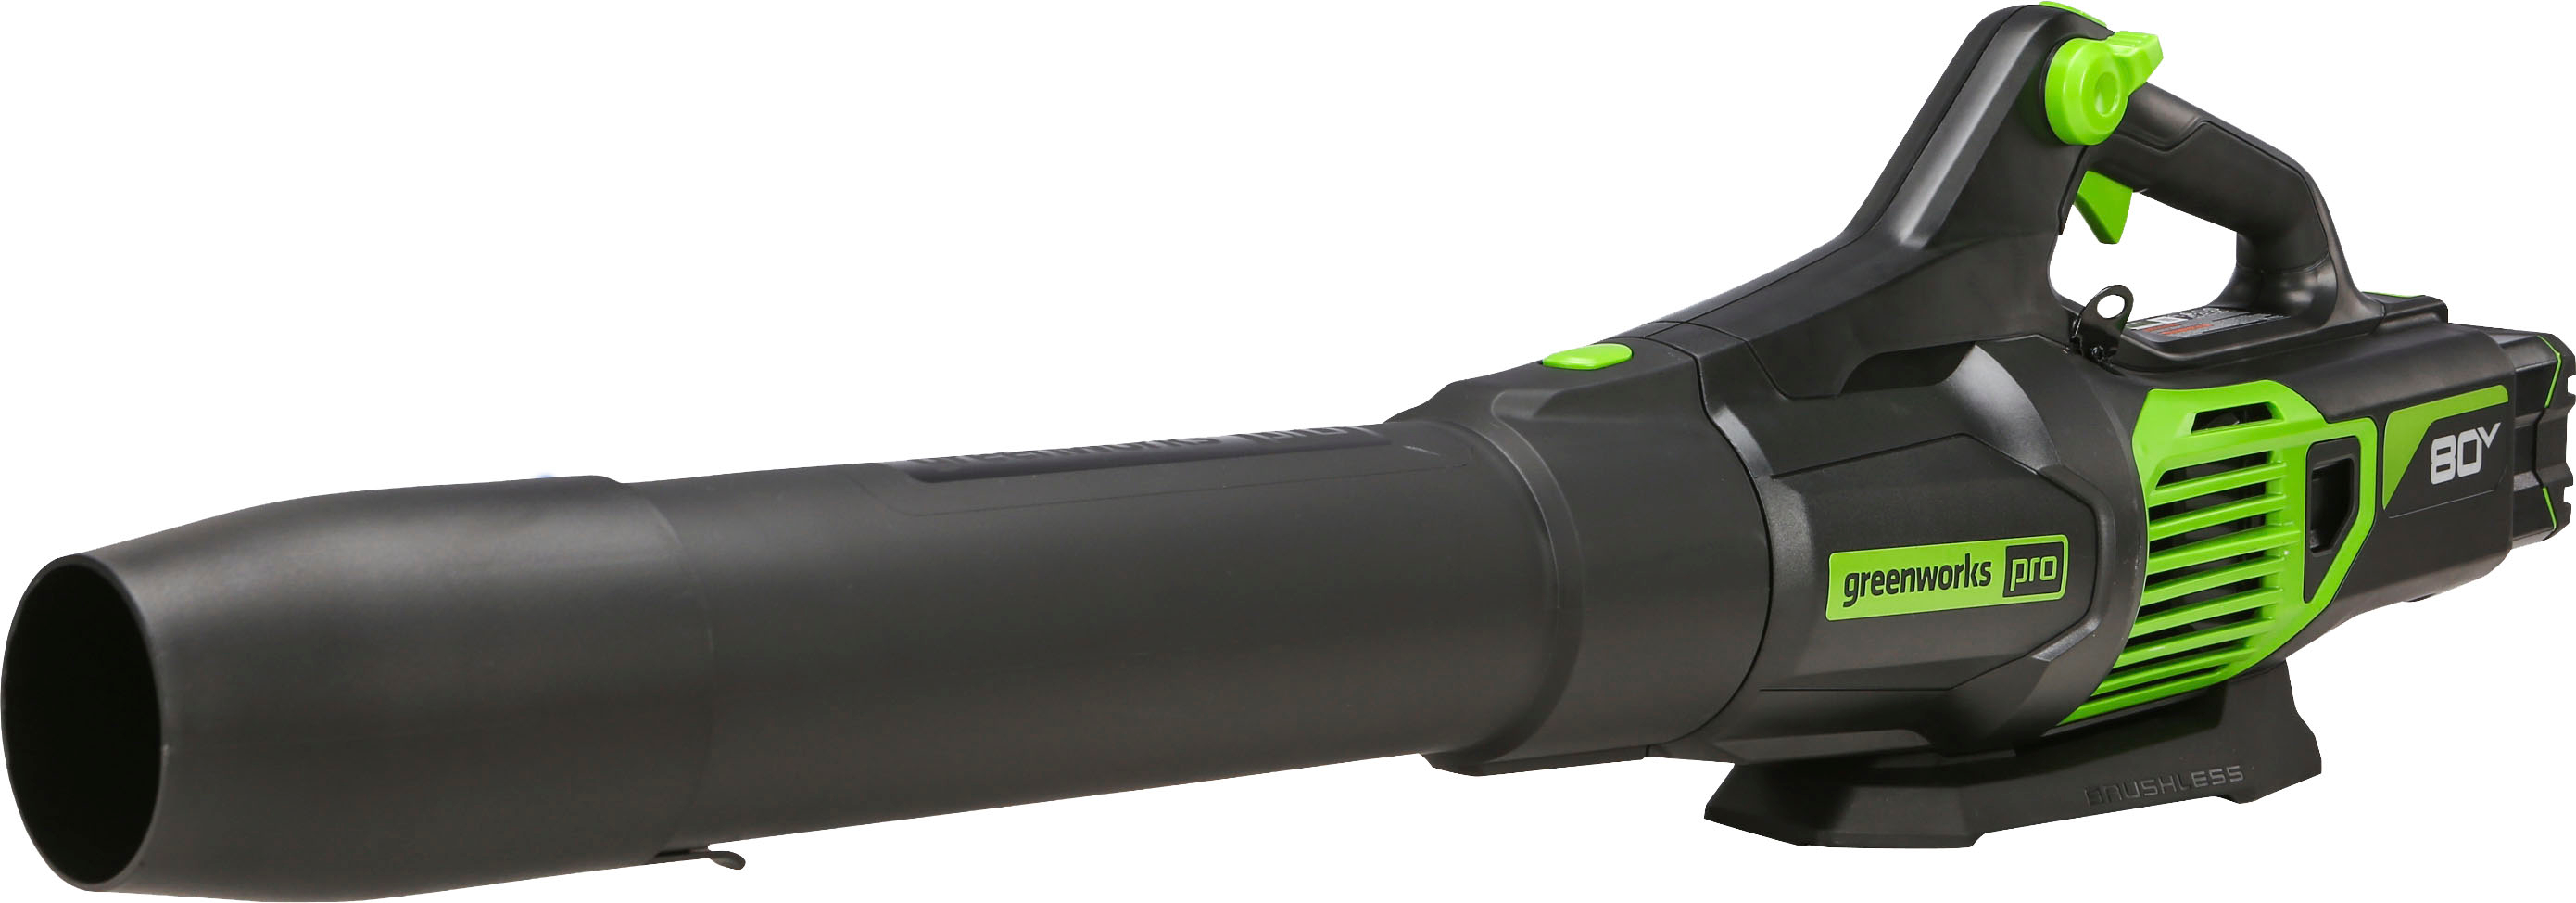 Angle View: Sun Joe - Cordless Brushless Turbine Jet Blower Core Tool - Green